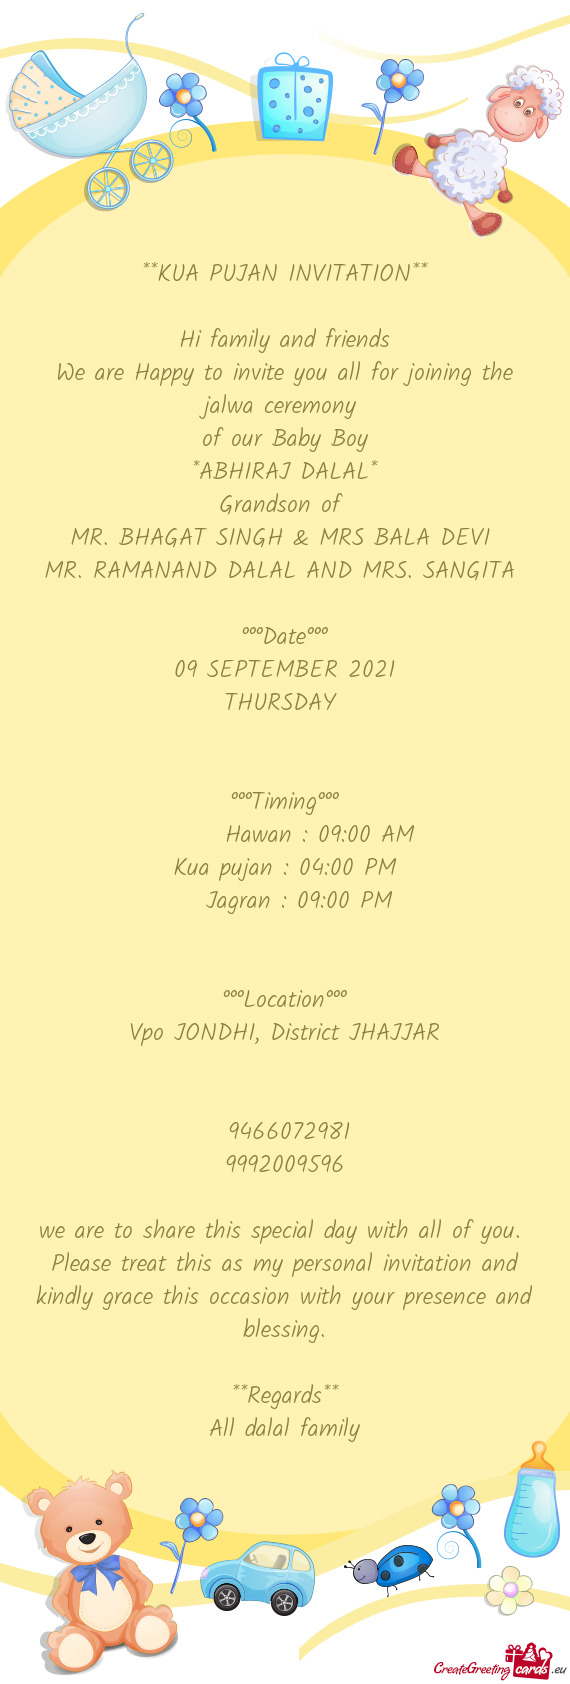 MR. BHAGAT SINGH & MRS BALA DEVI